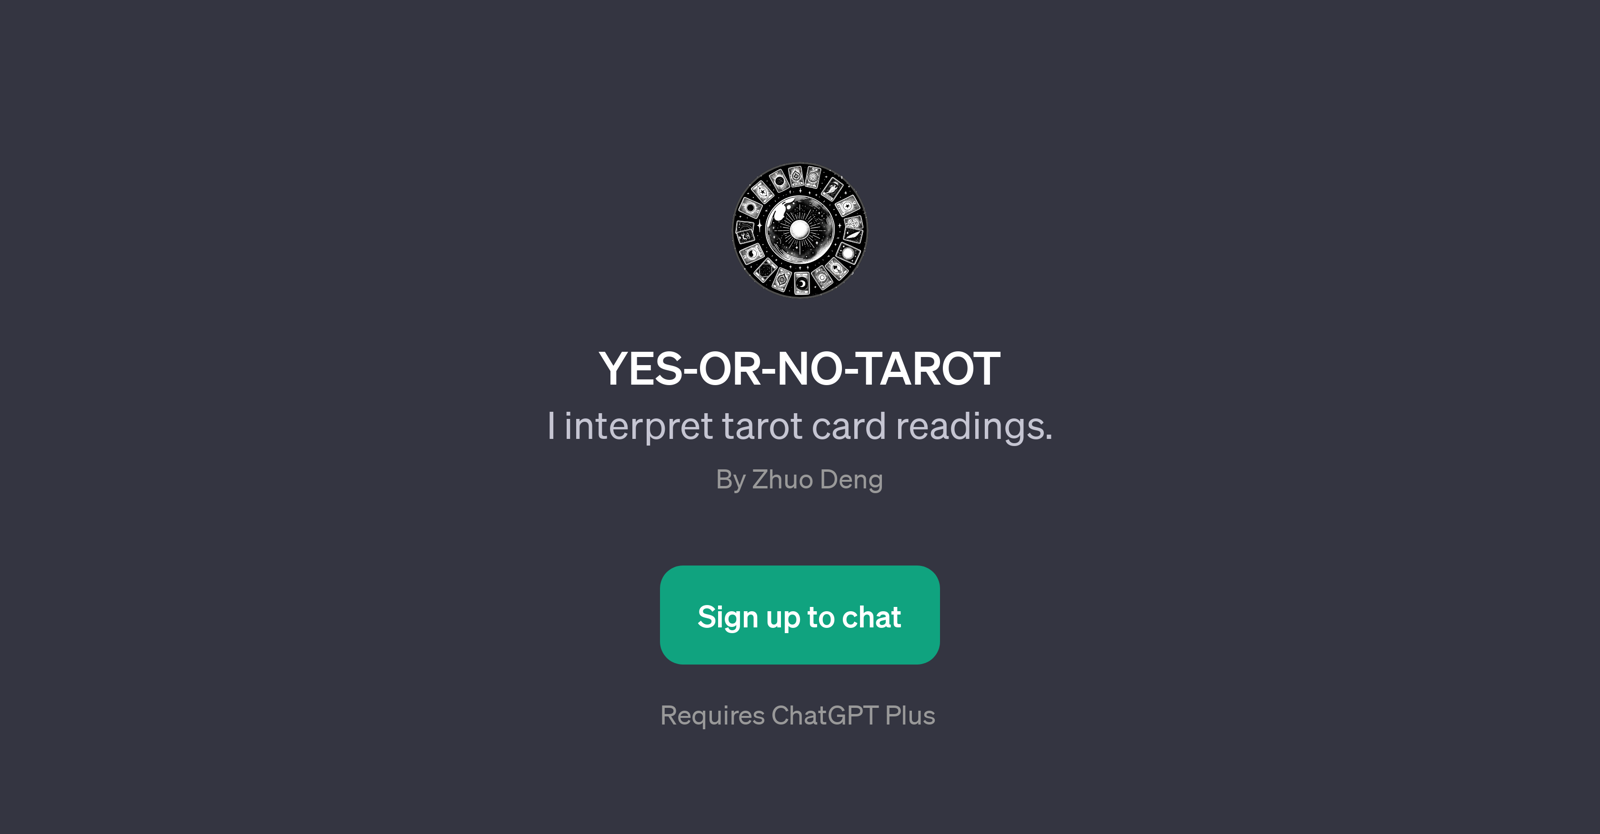 YES-OR-NO-TAROT website